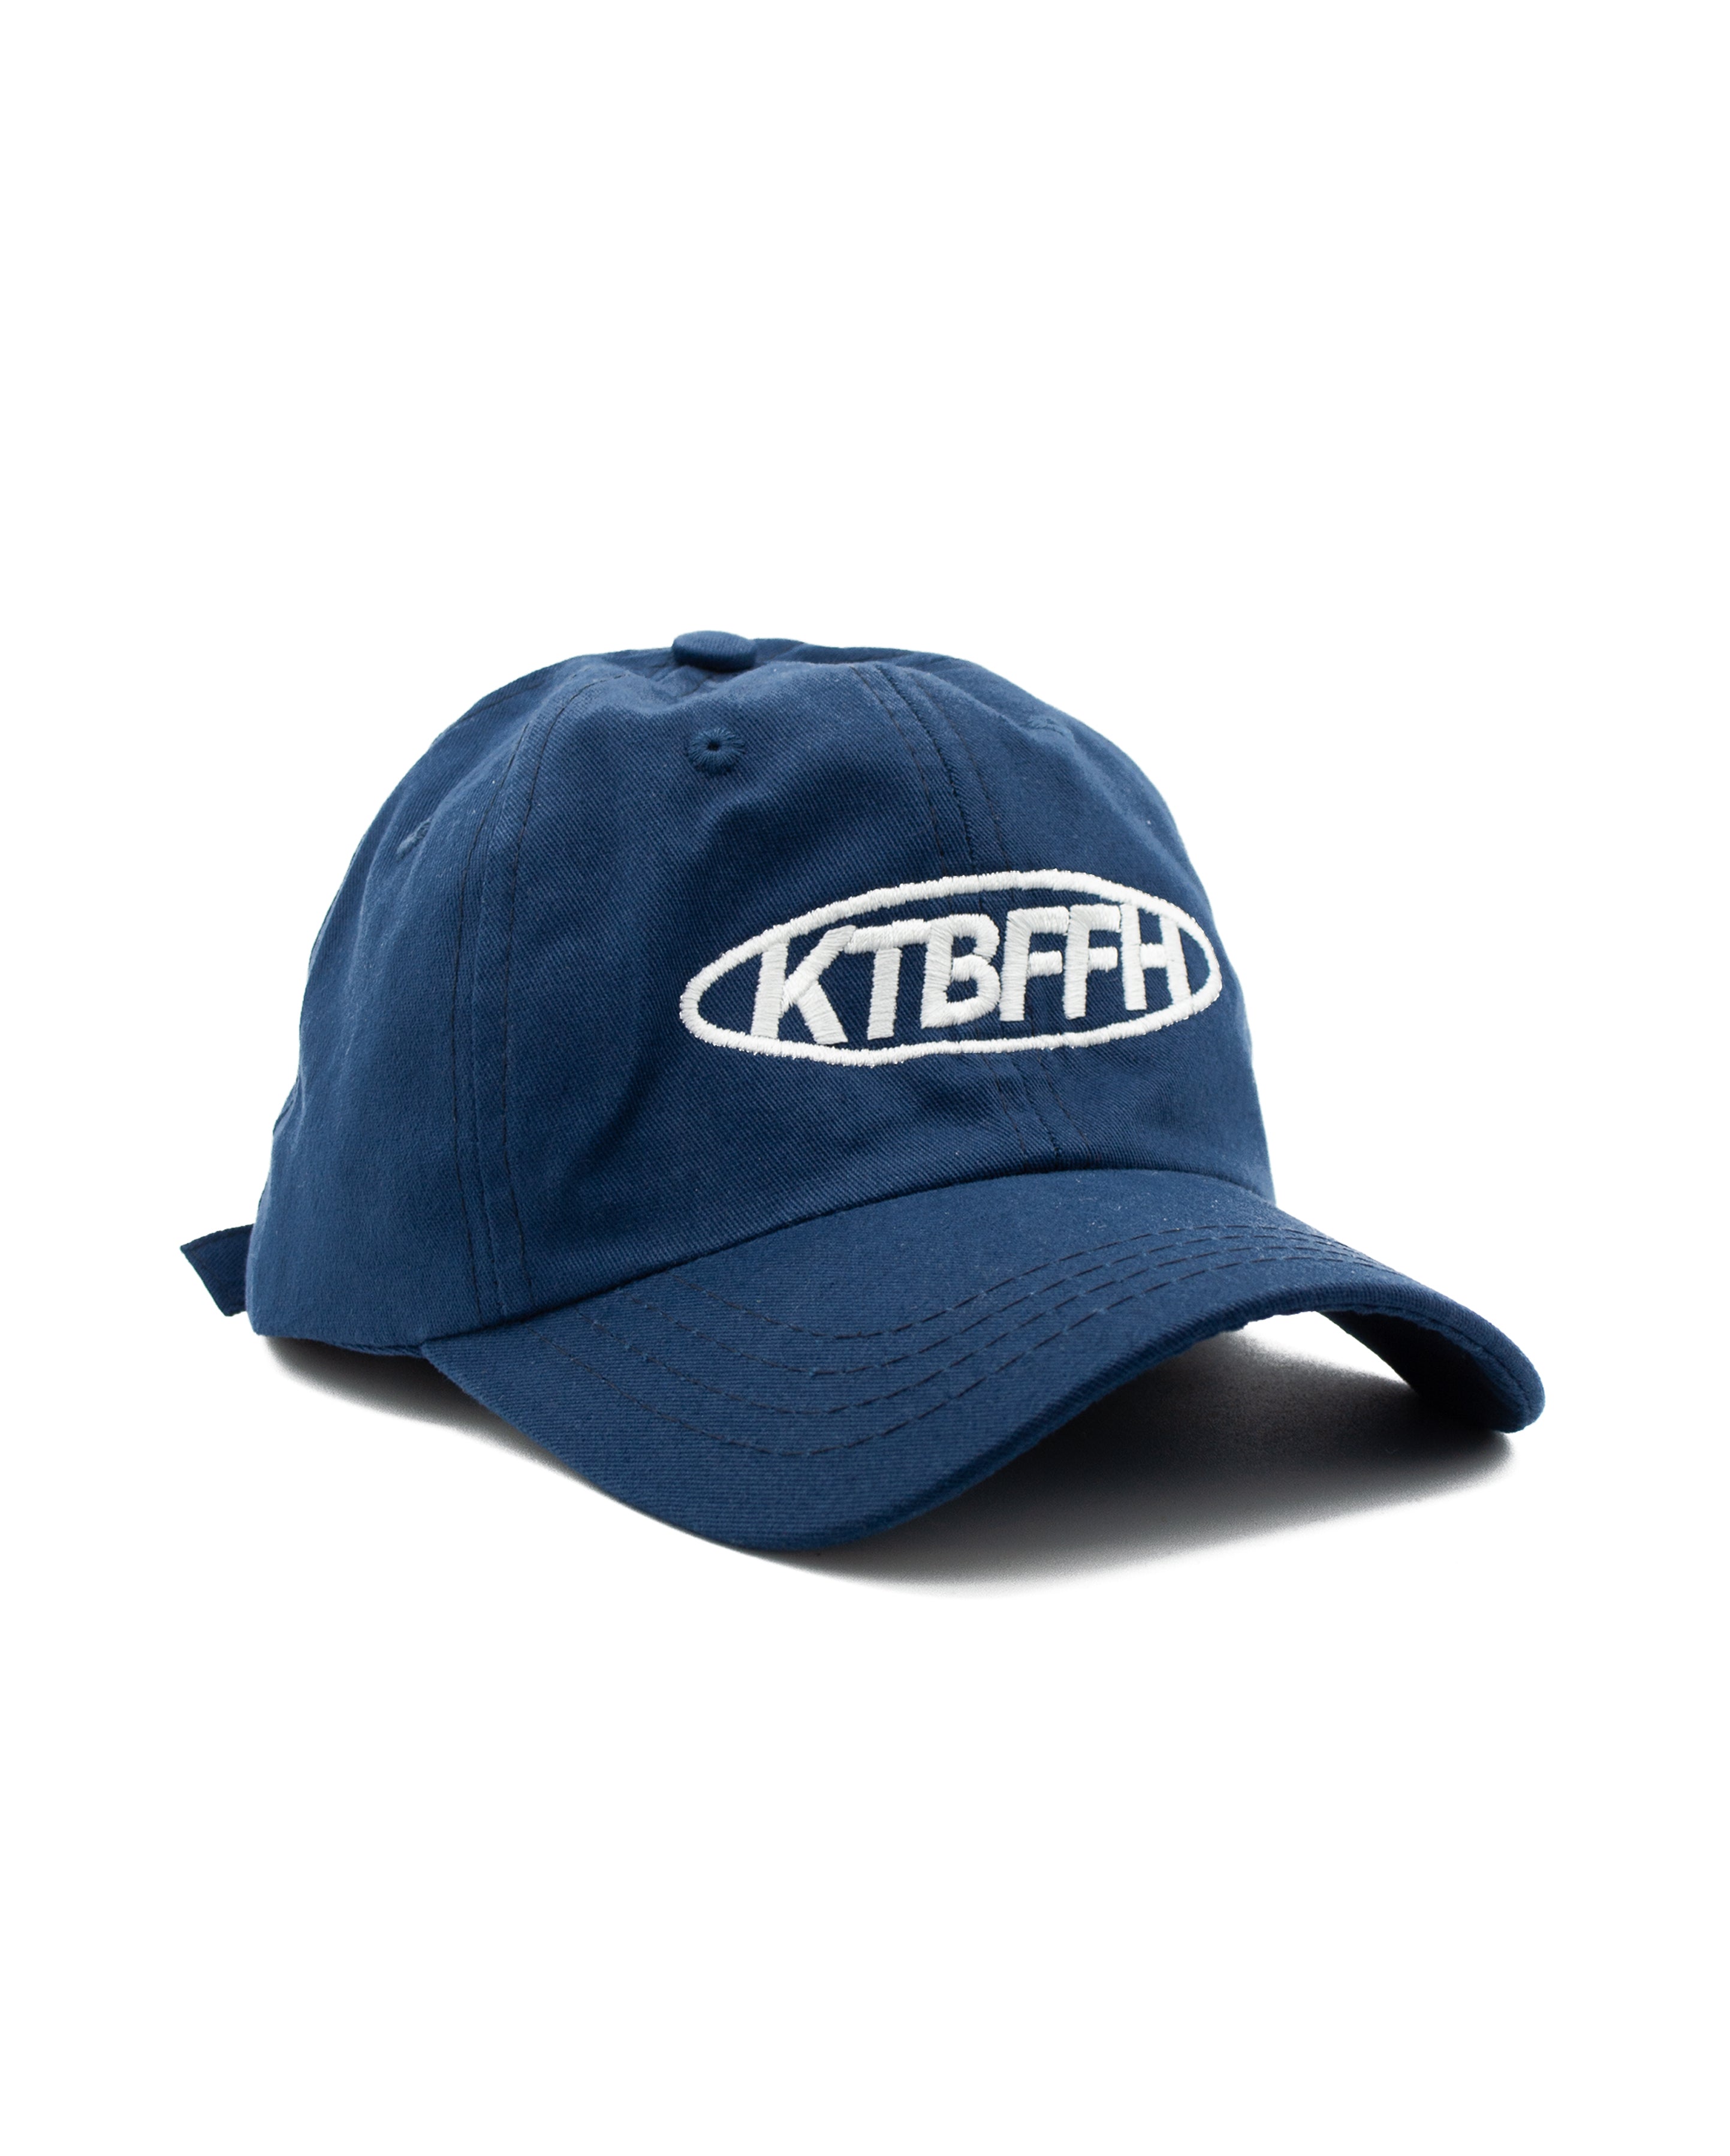 KTBFFH - Embroidered Cap